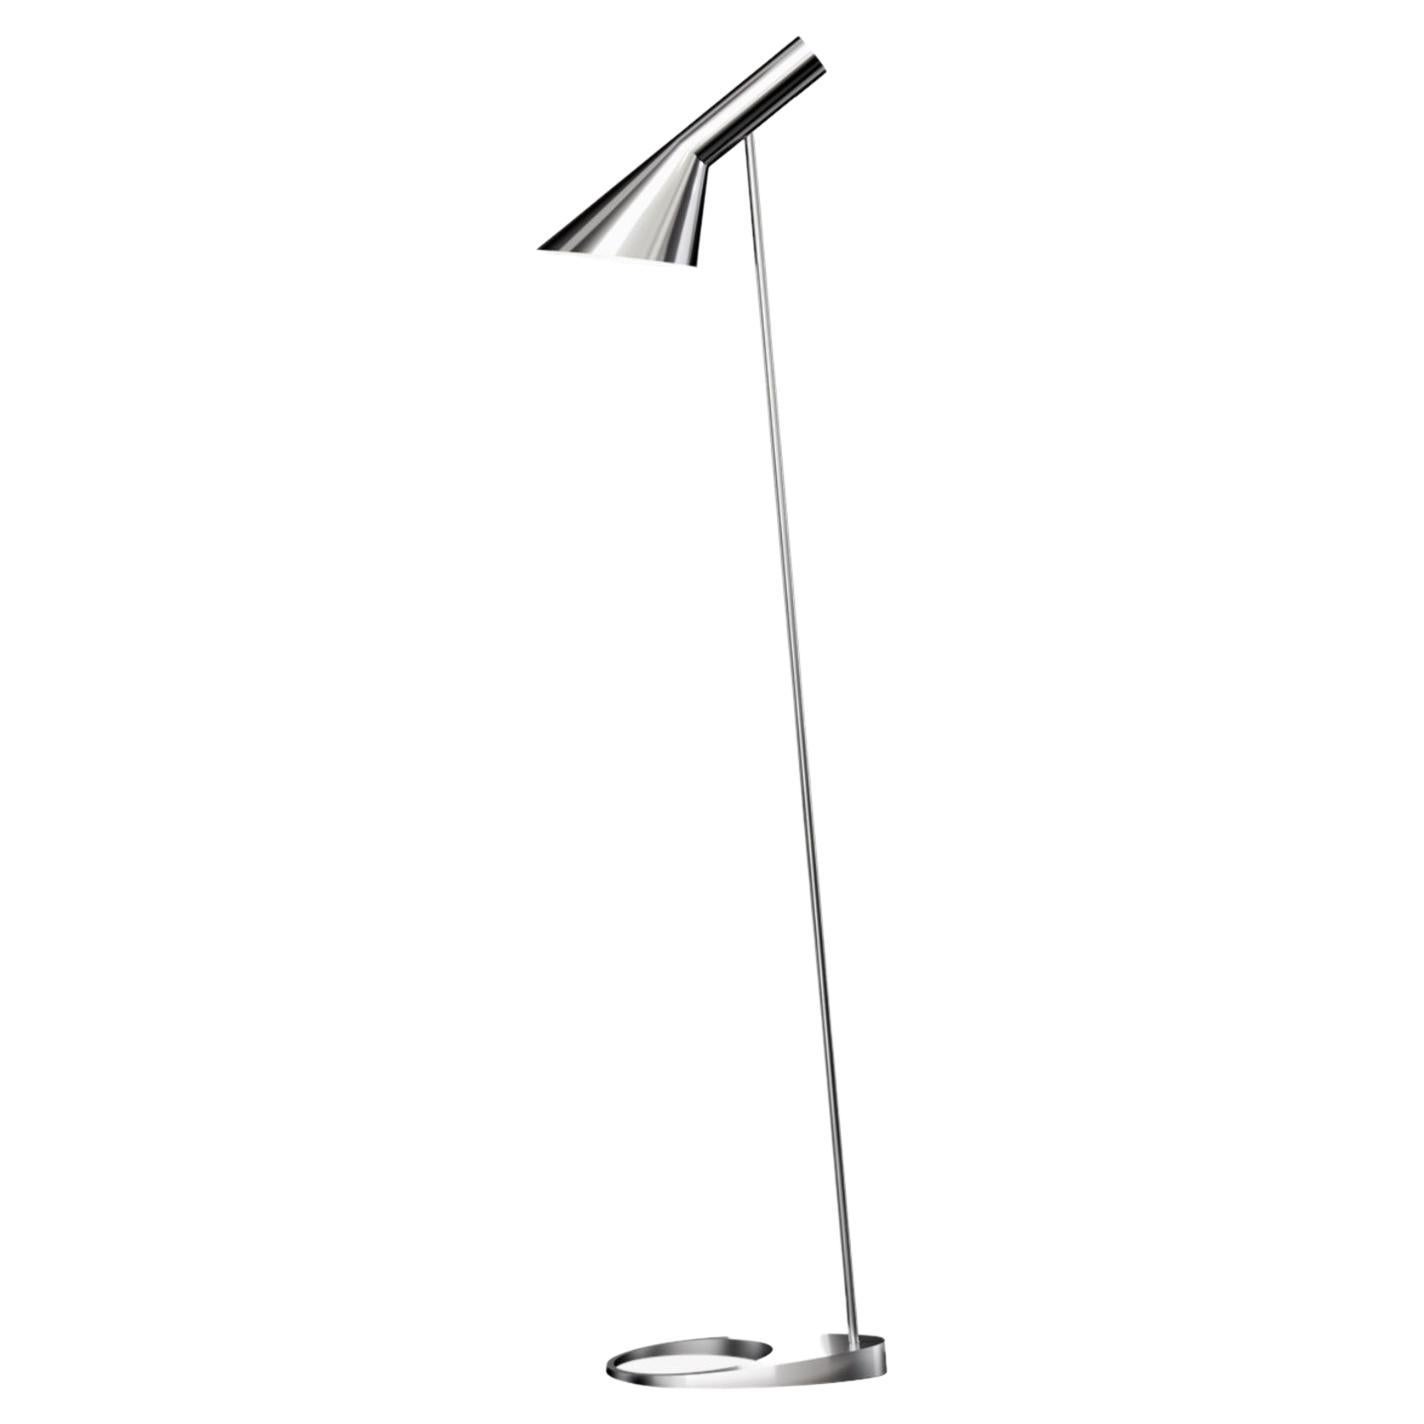 Arne Jacobsen AJ Floor Lamp 1957 in Polished Stainless Steel for Louis Poulsen For Sale